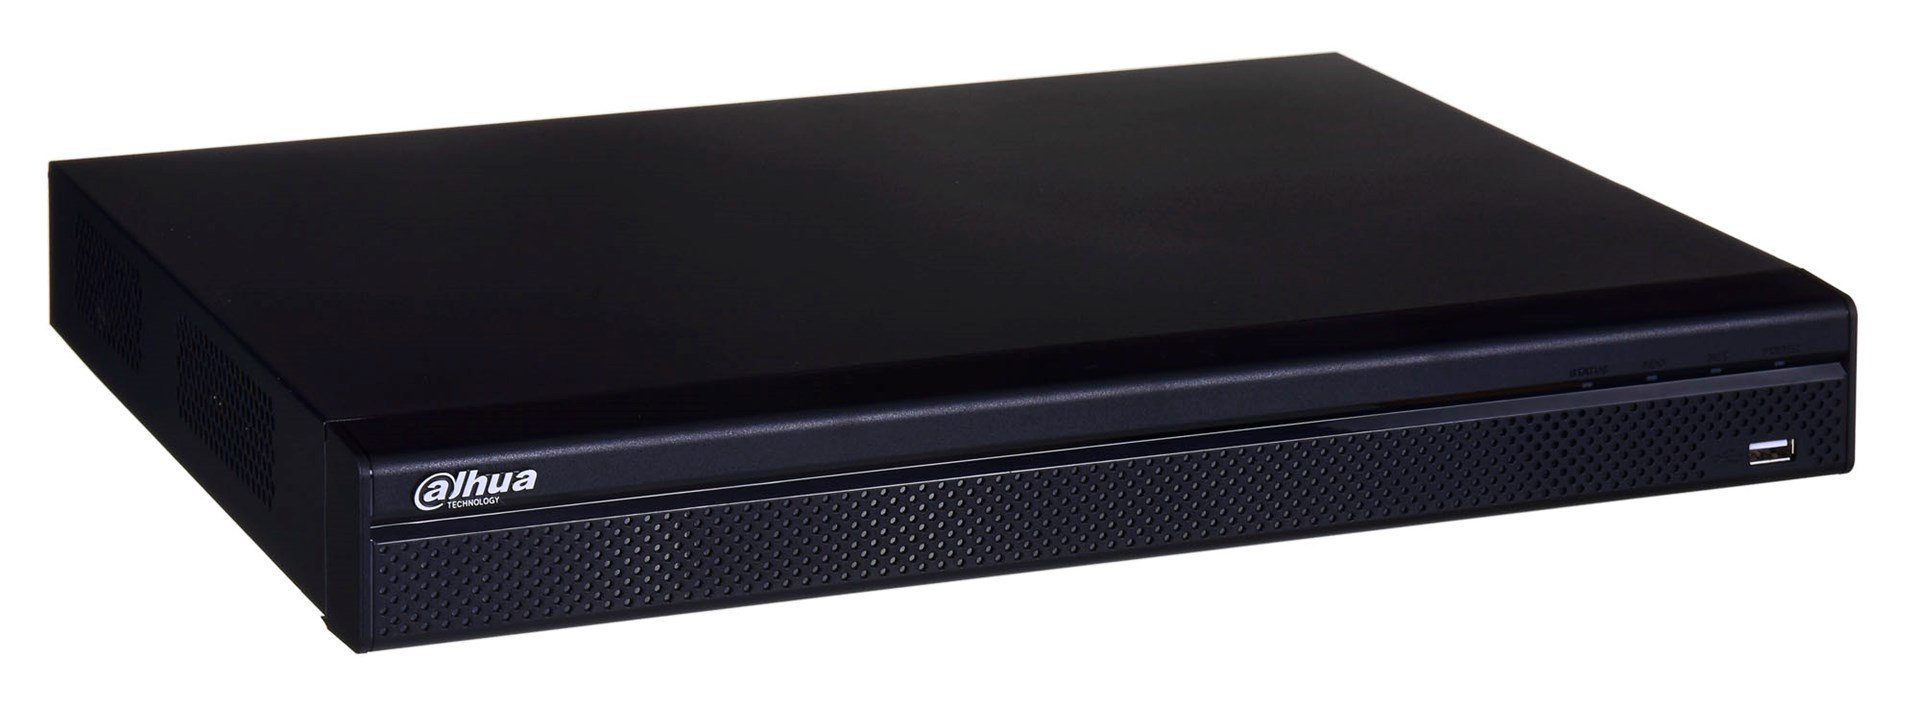 Dahua NVR4232-4KS2/L IP-Rekorder Netzwerk-Videorecorder